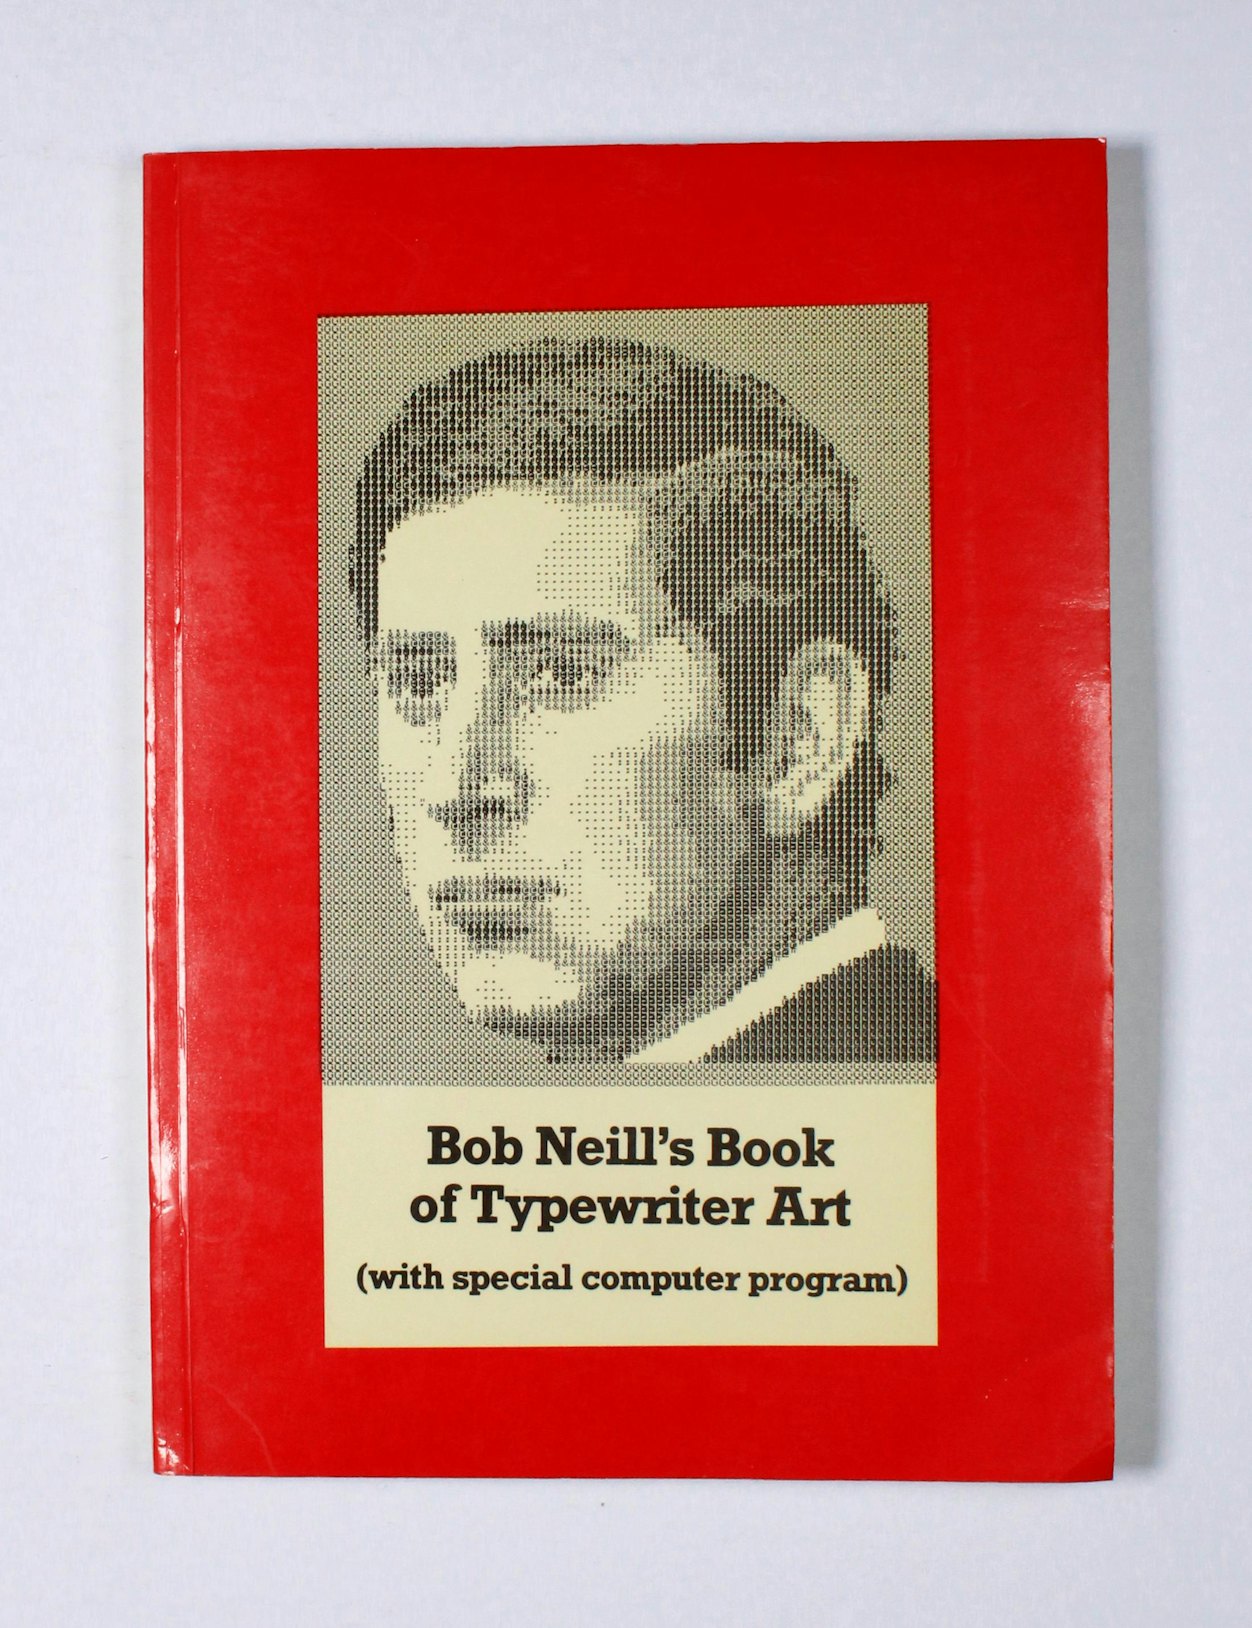 Bob Neill’s Book of Typewriter Art